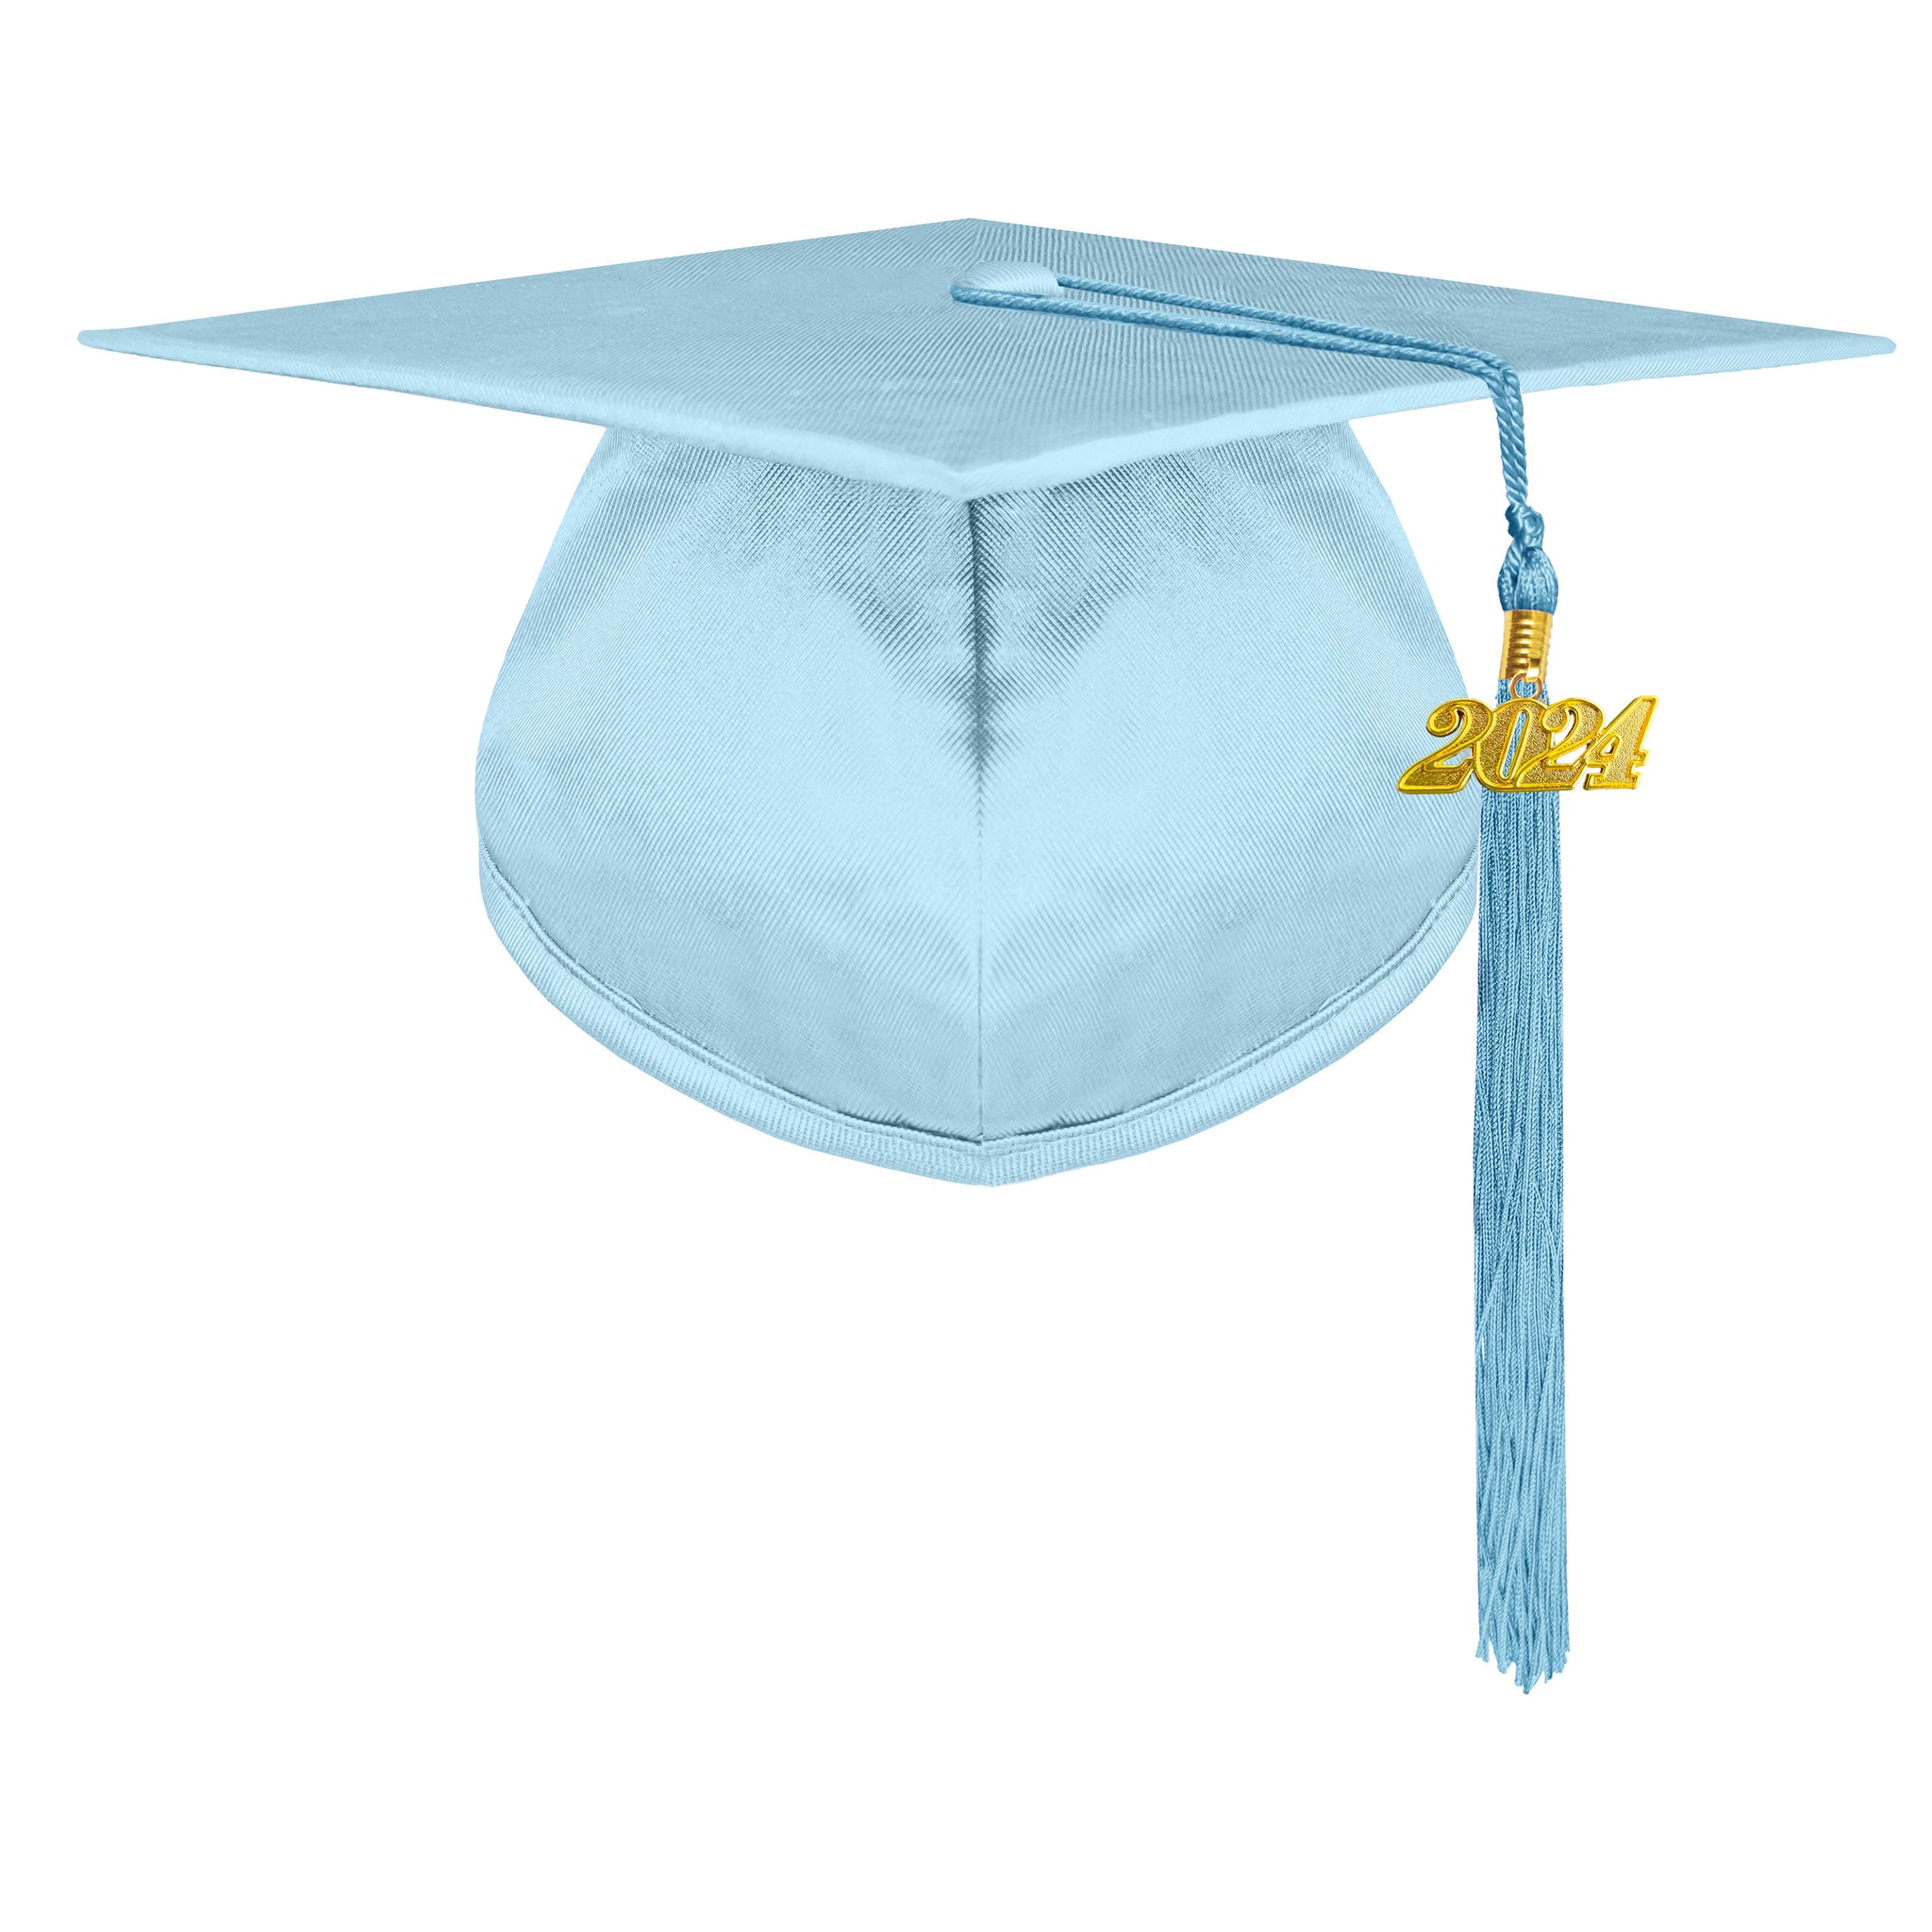 Unisex Adult Shiny Graduation Cap with Graduation Tassel Charm 2024（Sky Blue ）